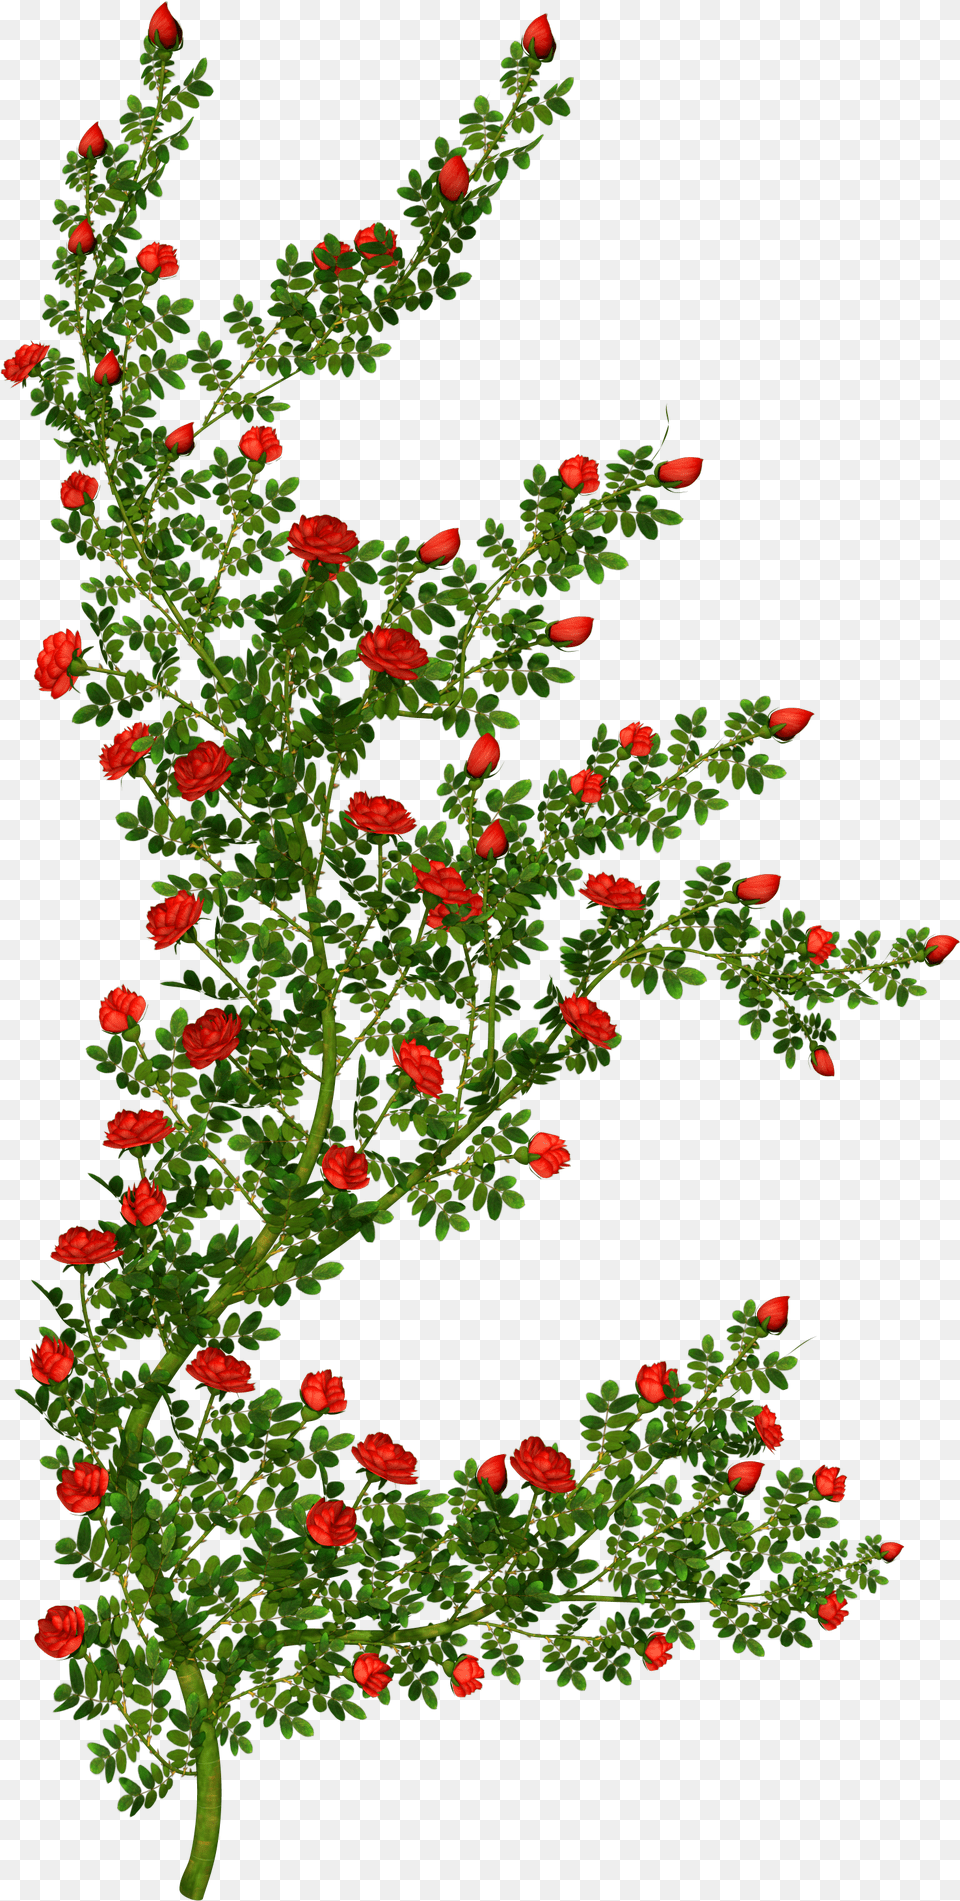 Bushes Clipart Transparent Flower Picture Cartoon Rose Bush, Tree, Conifer, Plant, Pattern Png Image